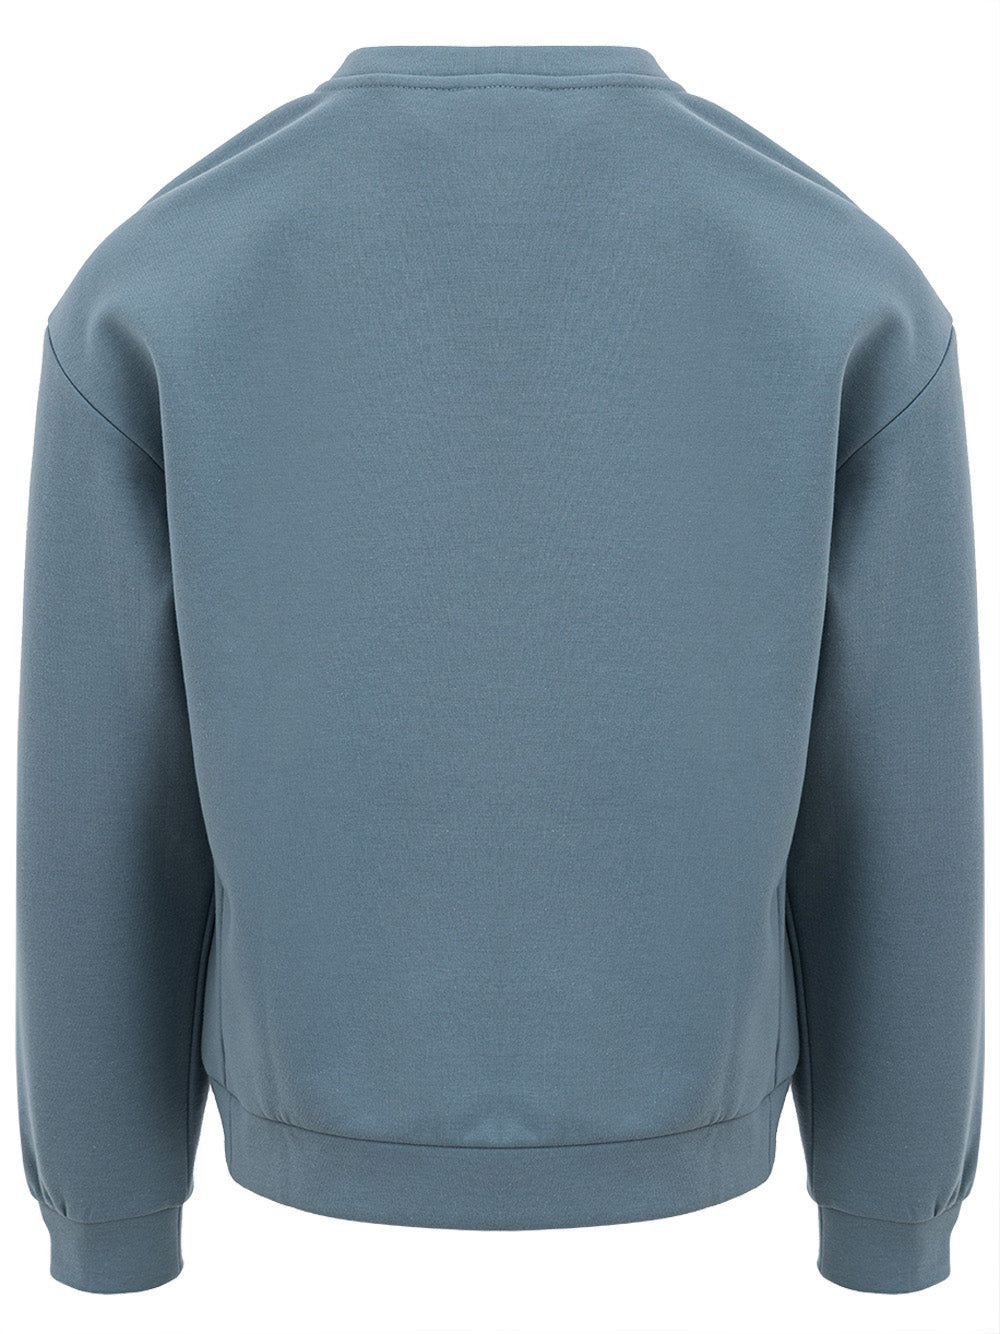 Basic EA7 Emporio Armani sweatshirt.